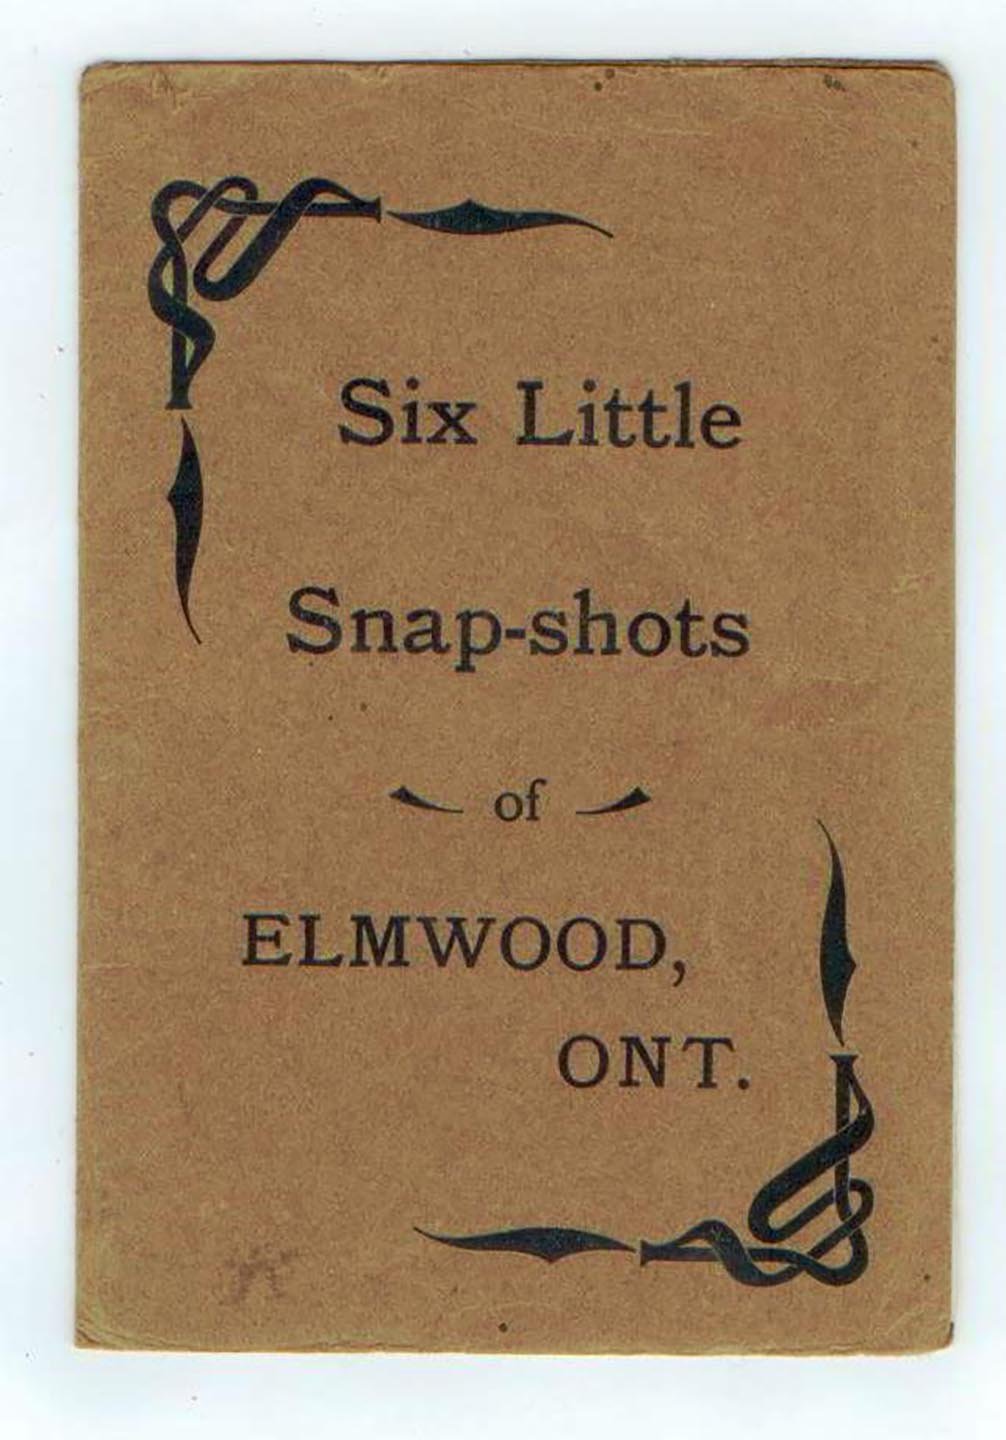 Six Little Snap-shots of Elmwood, Ont